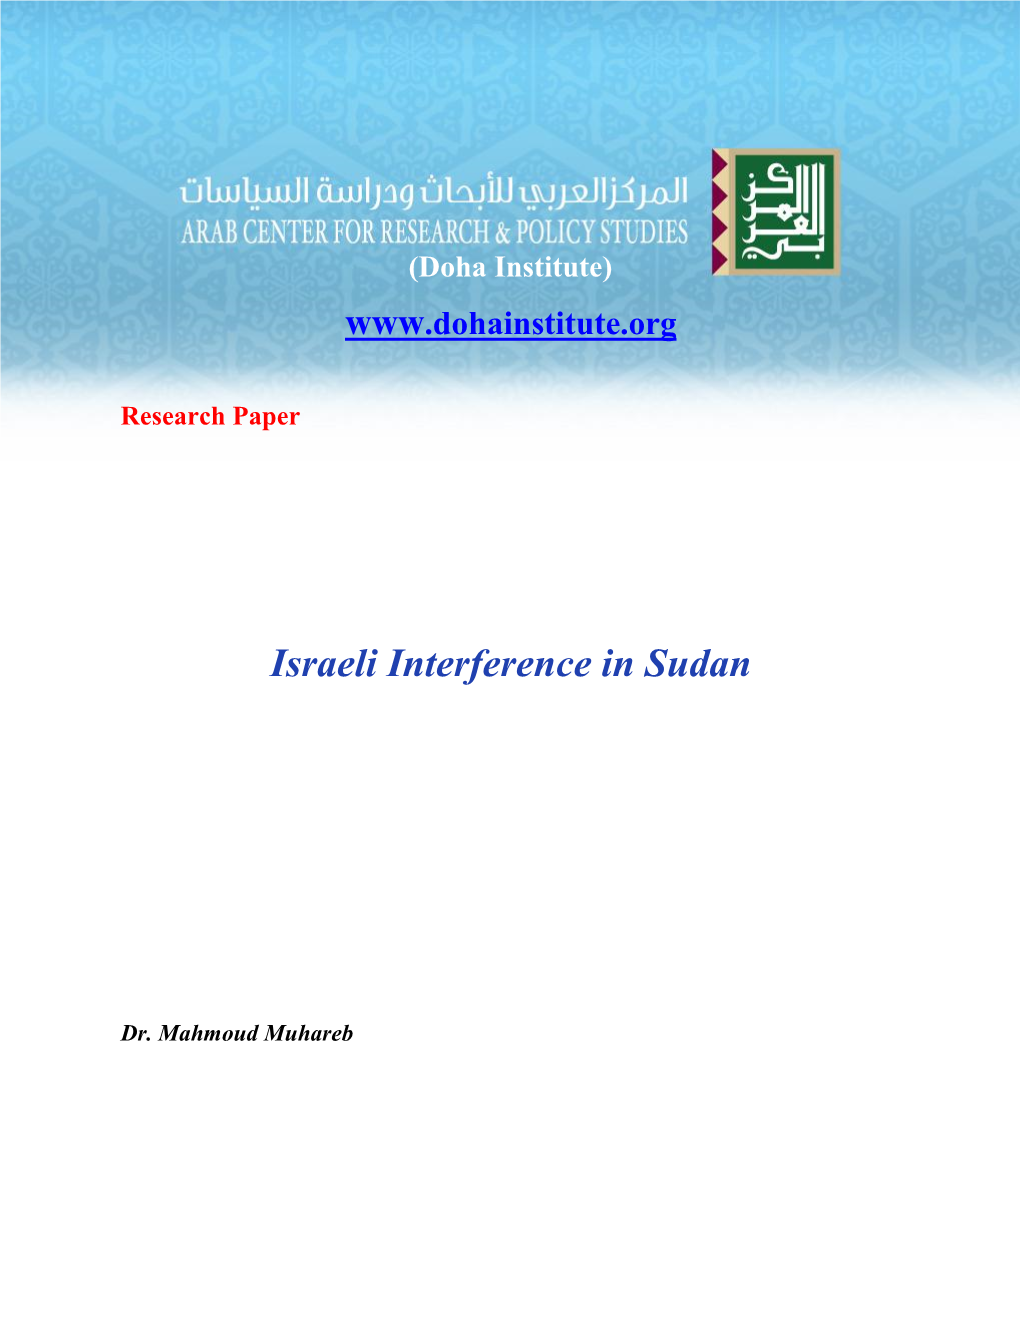 Israeli Interference in Sudan